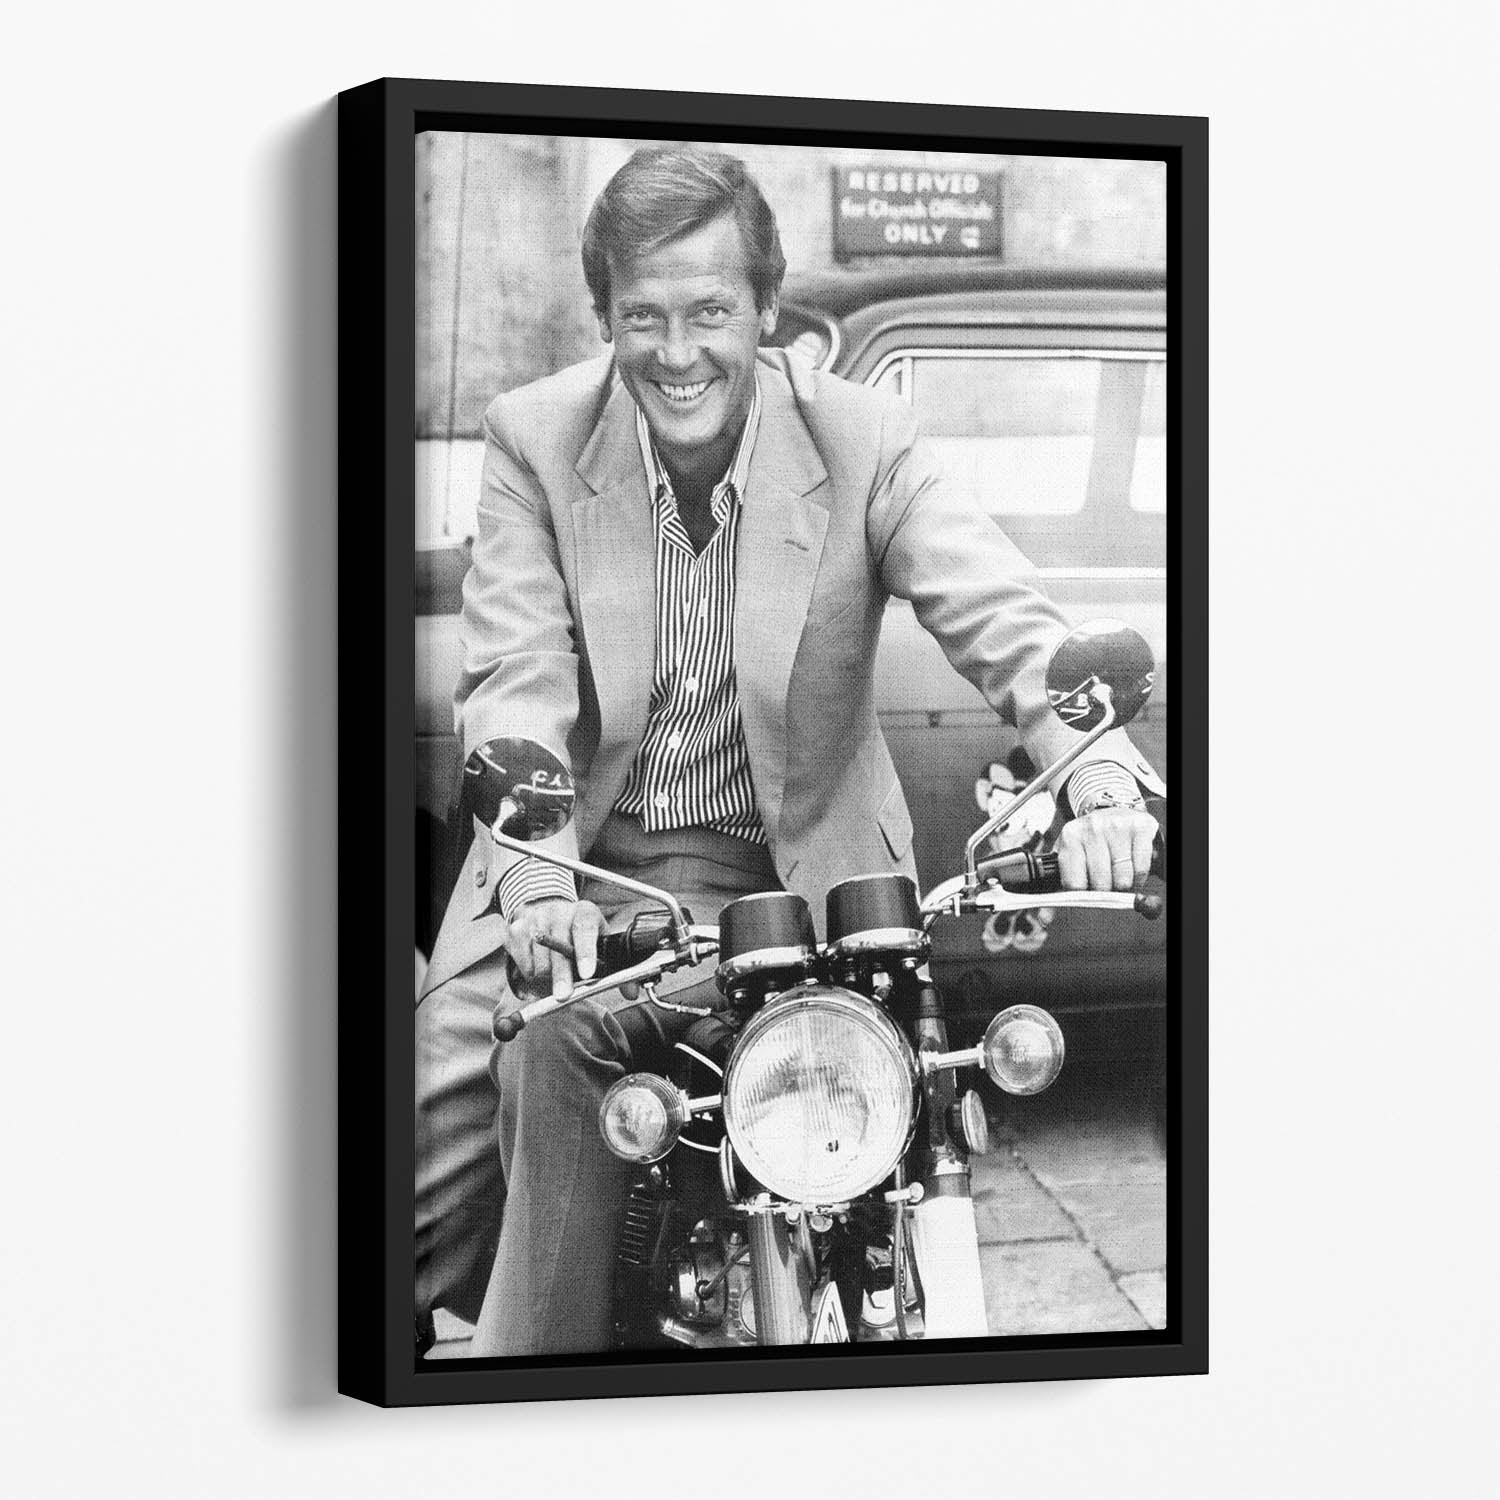 Roger Moore on a motorbike Floating Framed Canvas